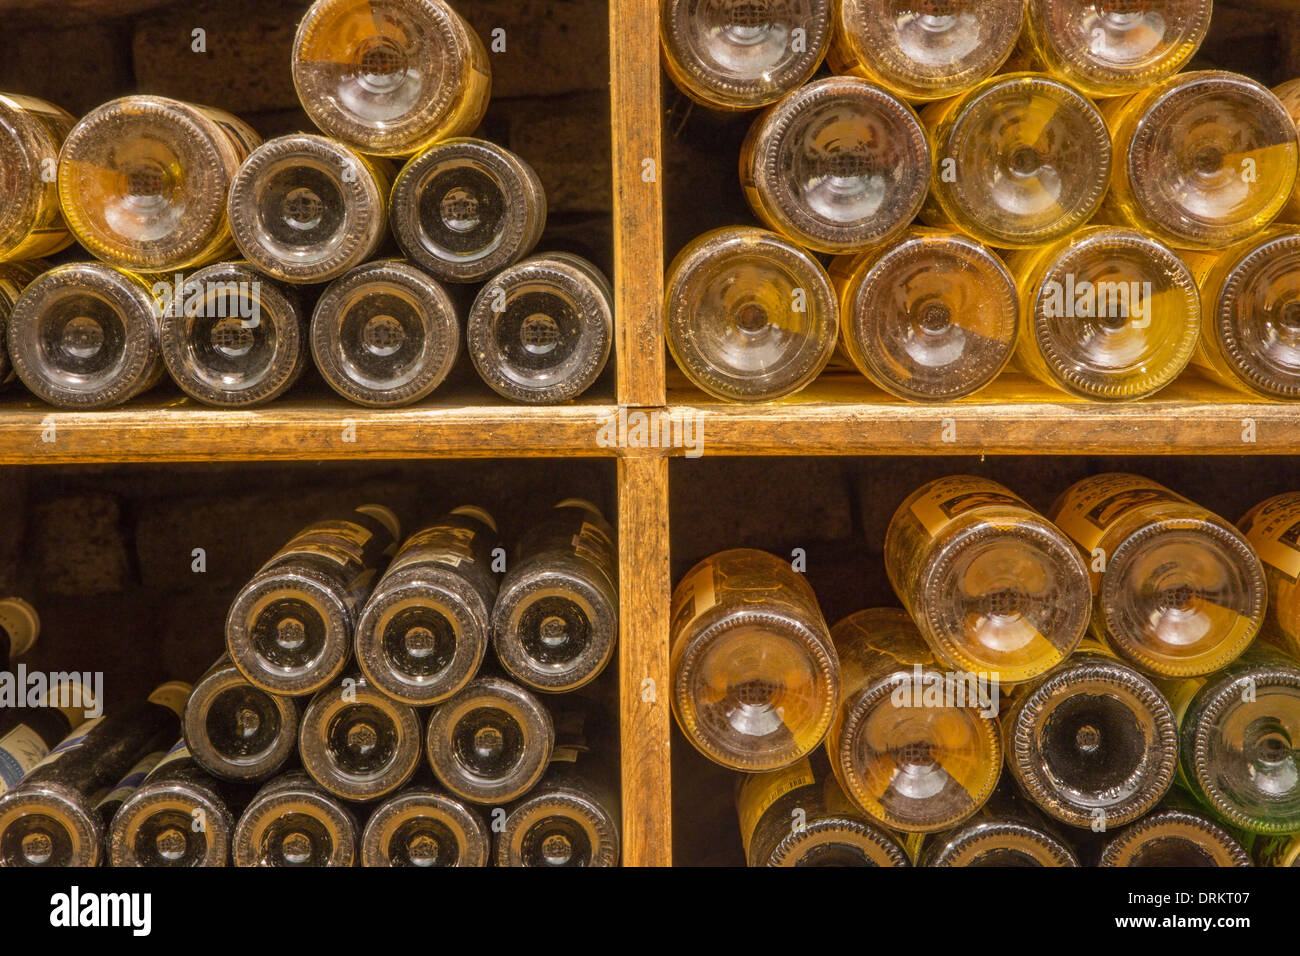 BRATISLAVA, SLOVAKIA - JANUARY 23, 2014: Detail of bottles from Interior of wine callar of great Slovak producer. Stock Photo